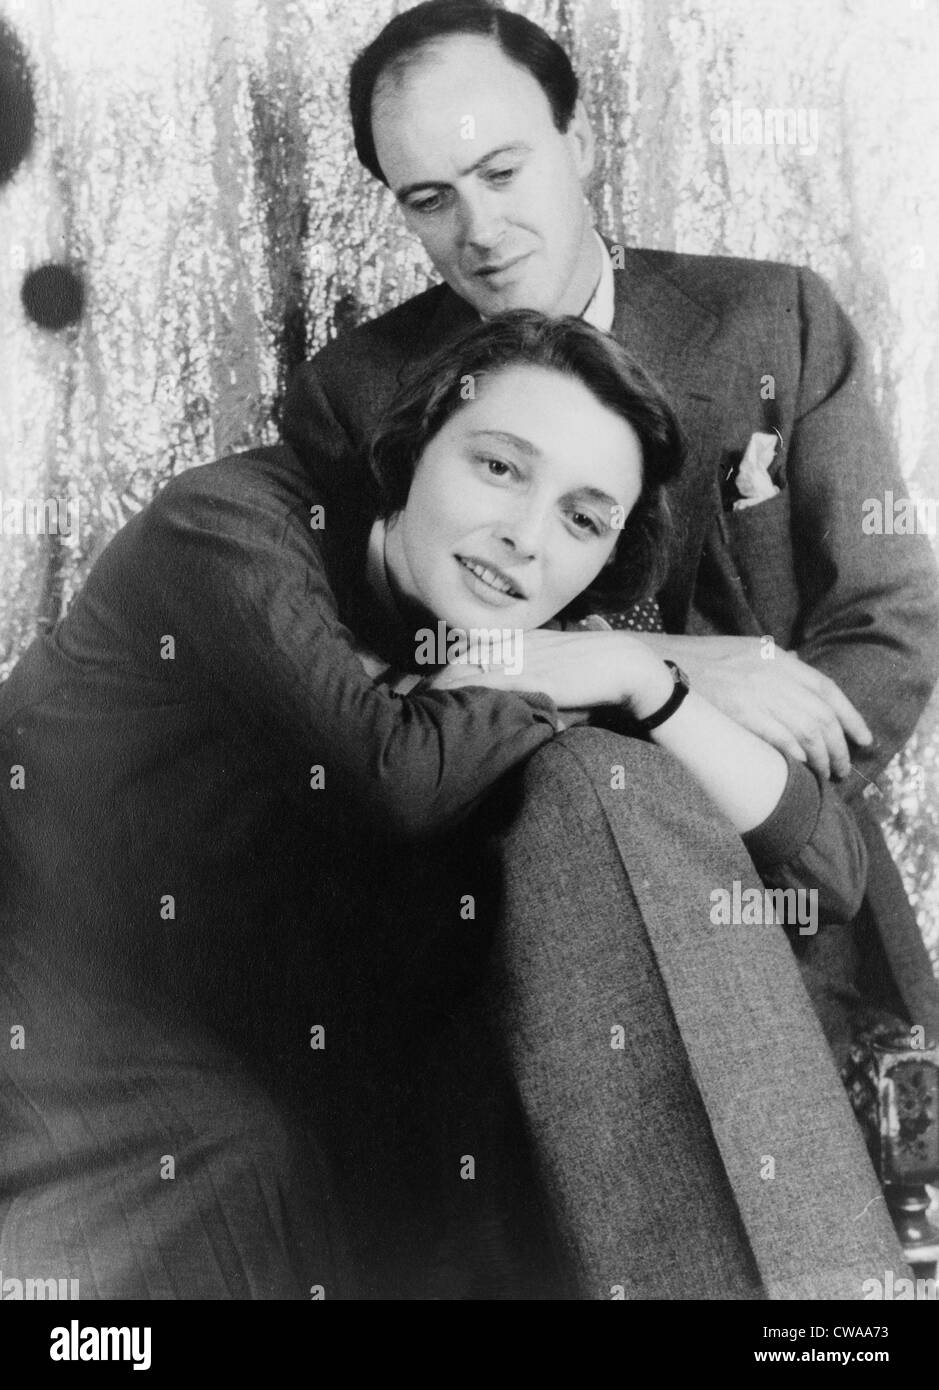 Roald Dahl (1916-1990), British author with his wife, Actress Patricia Neal (b. 1926) in 1954 portrait by Carl Van Vechten. Stock Photo